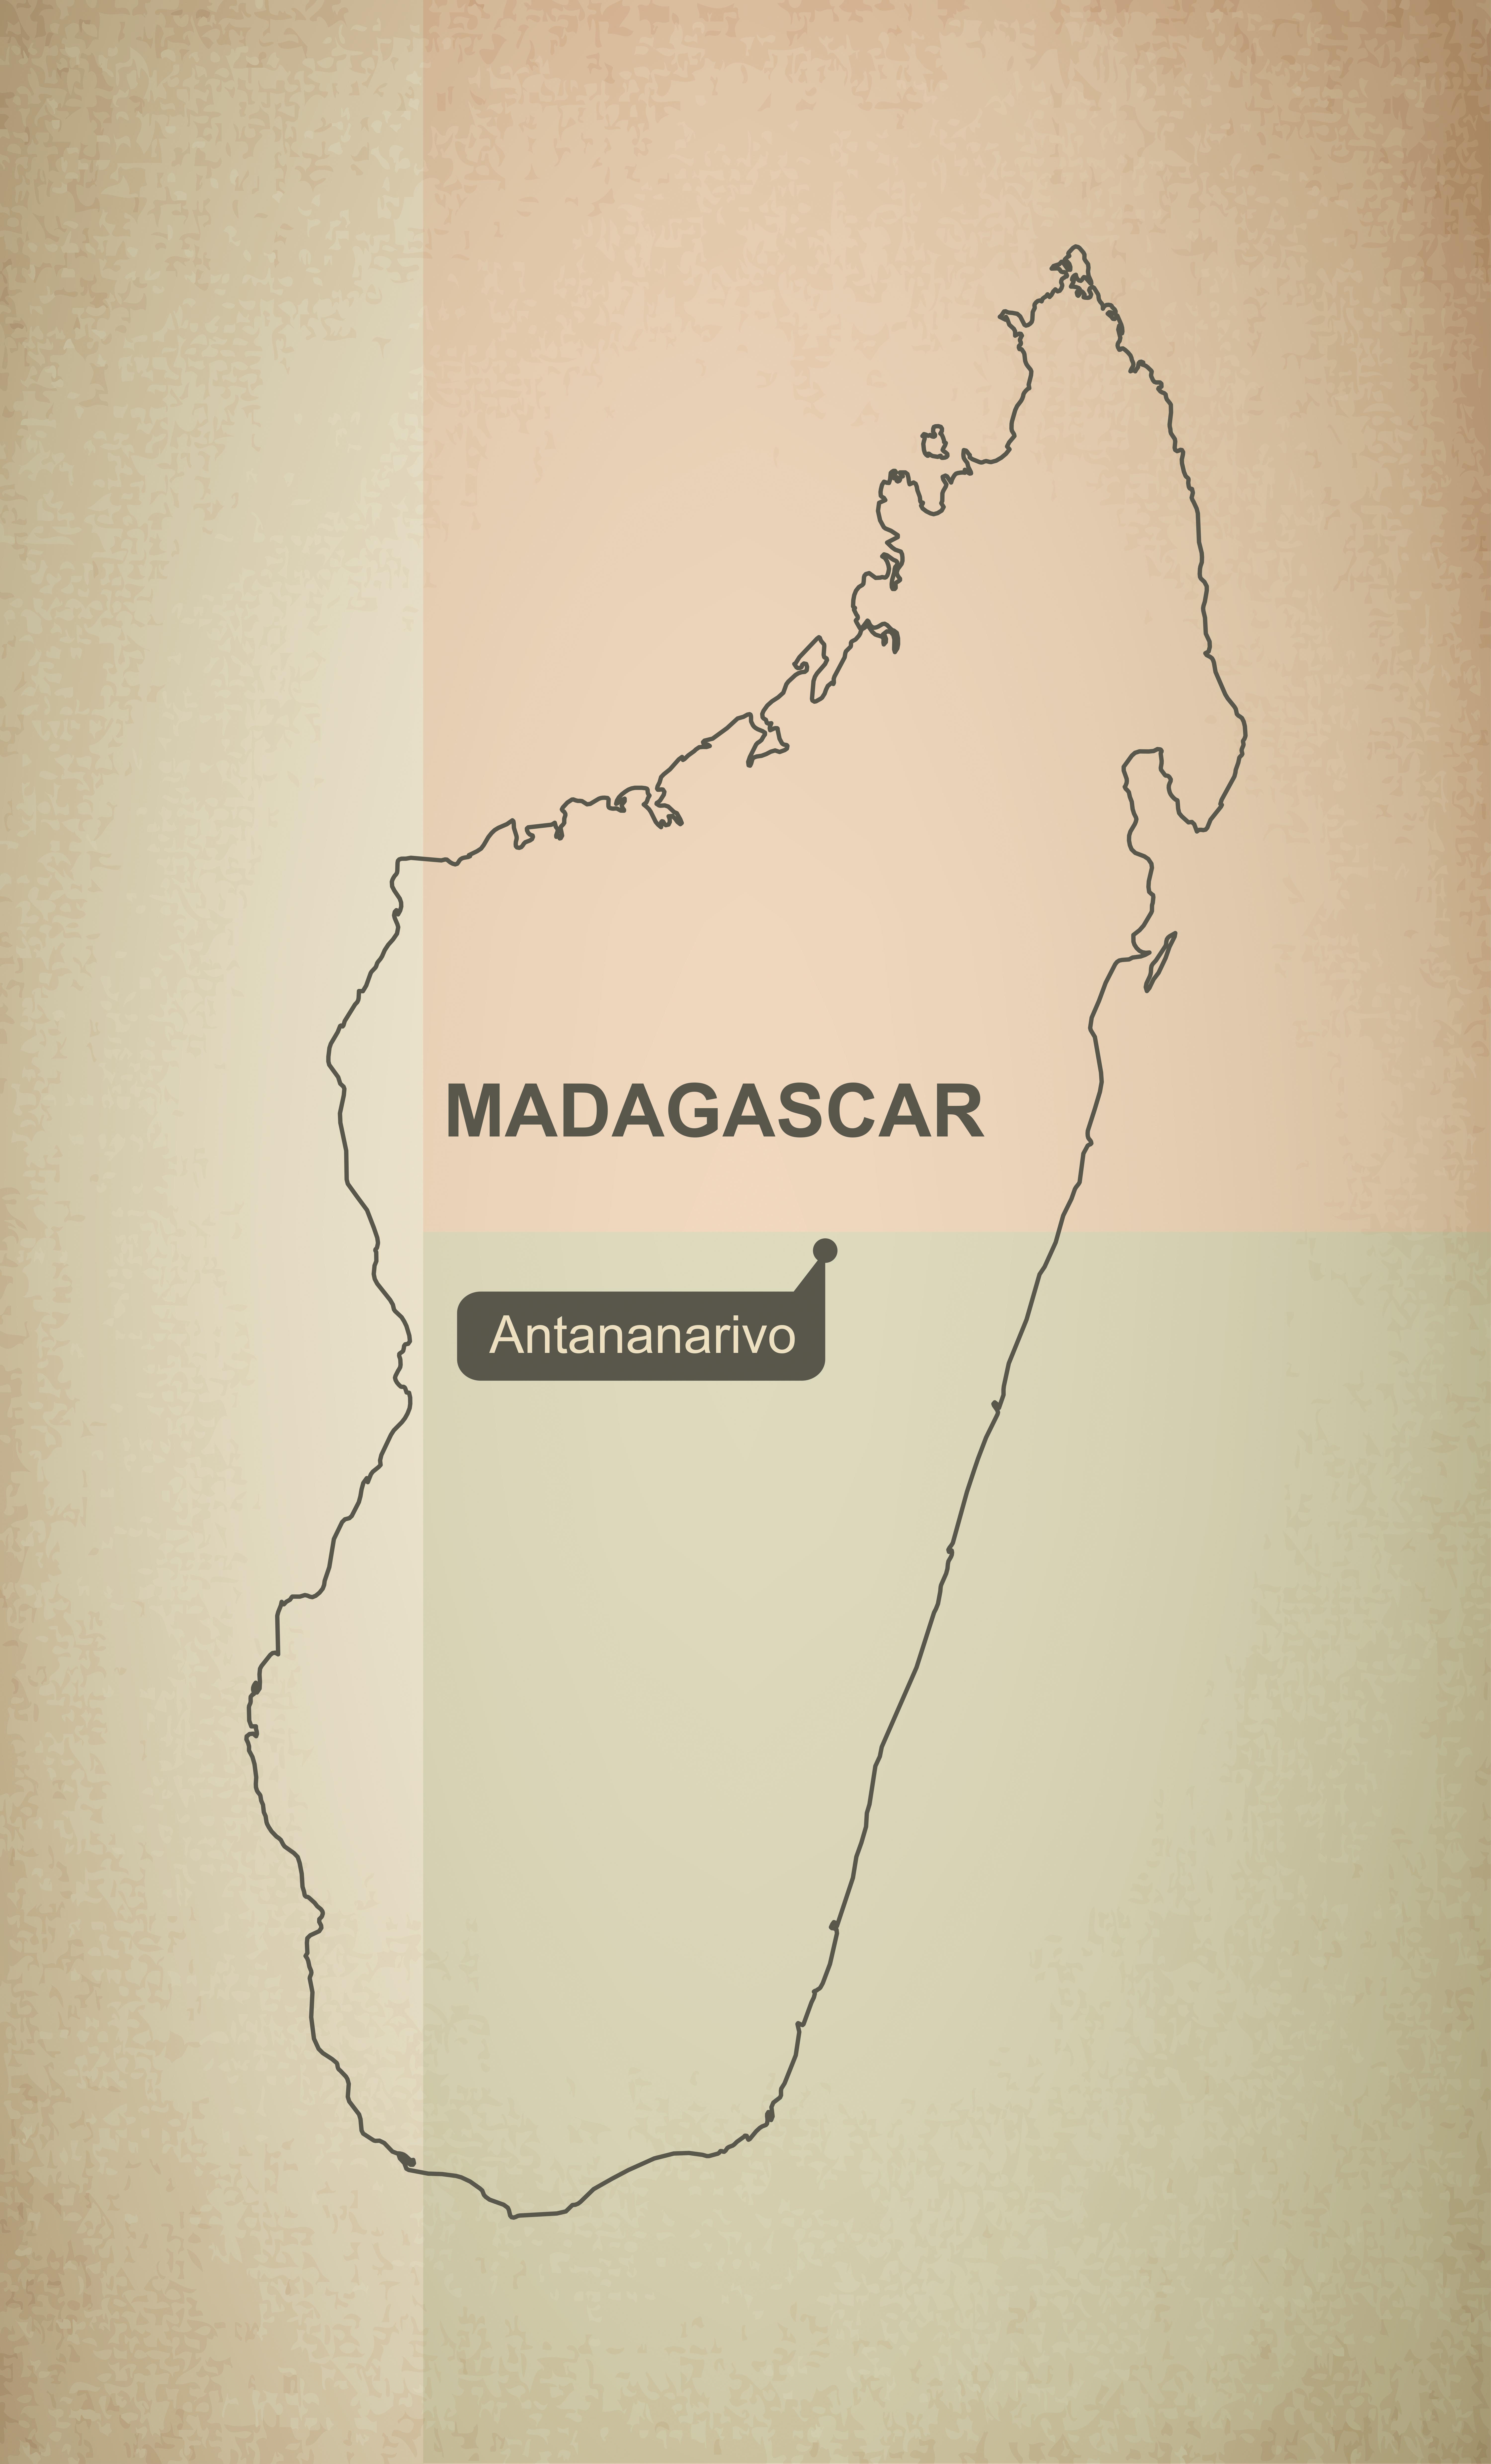 159-madagascar-outline-vm-ckmdg-d11-1